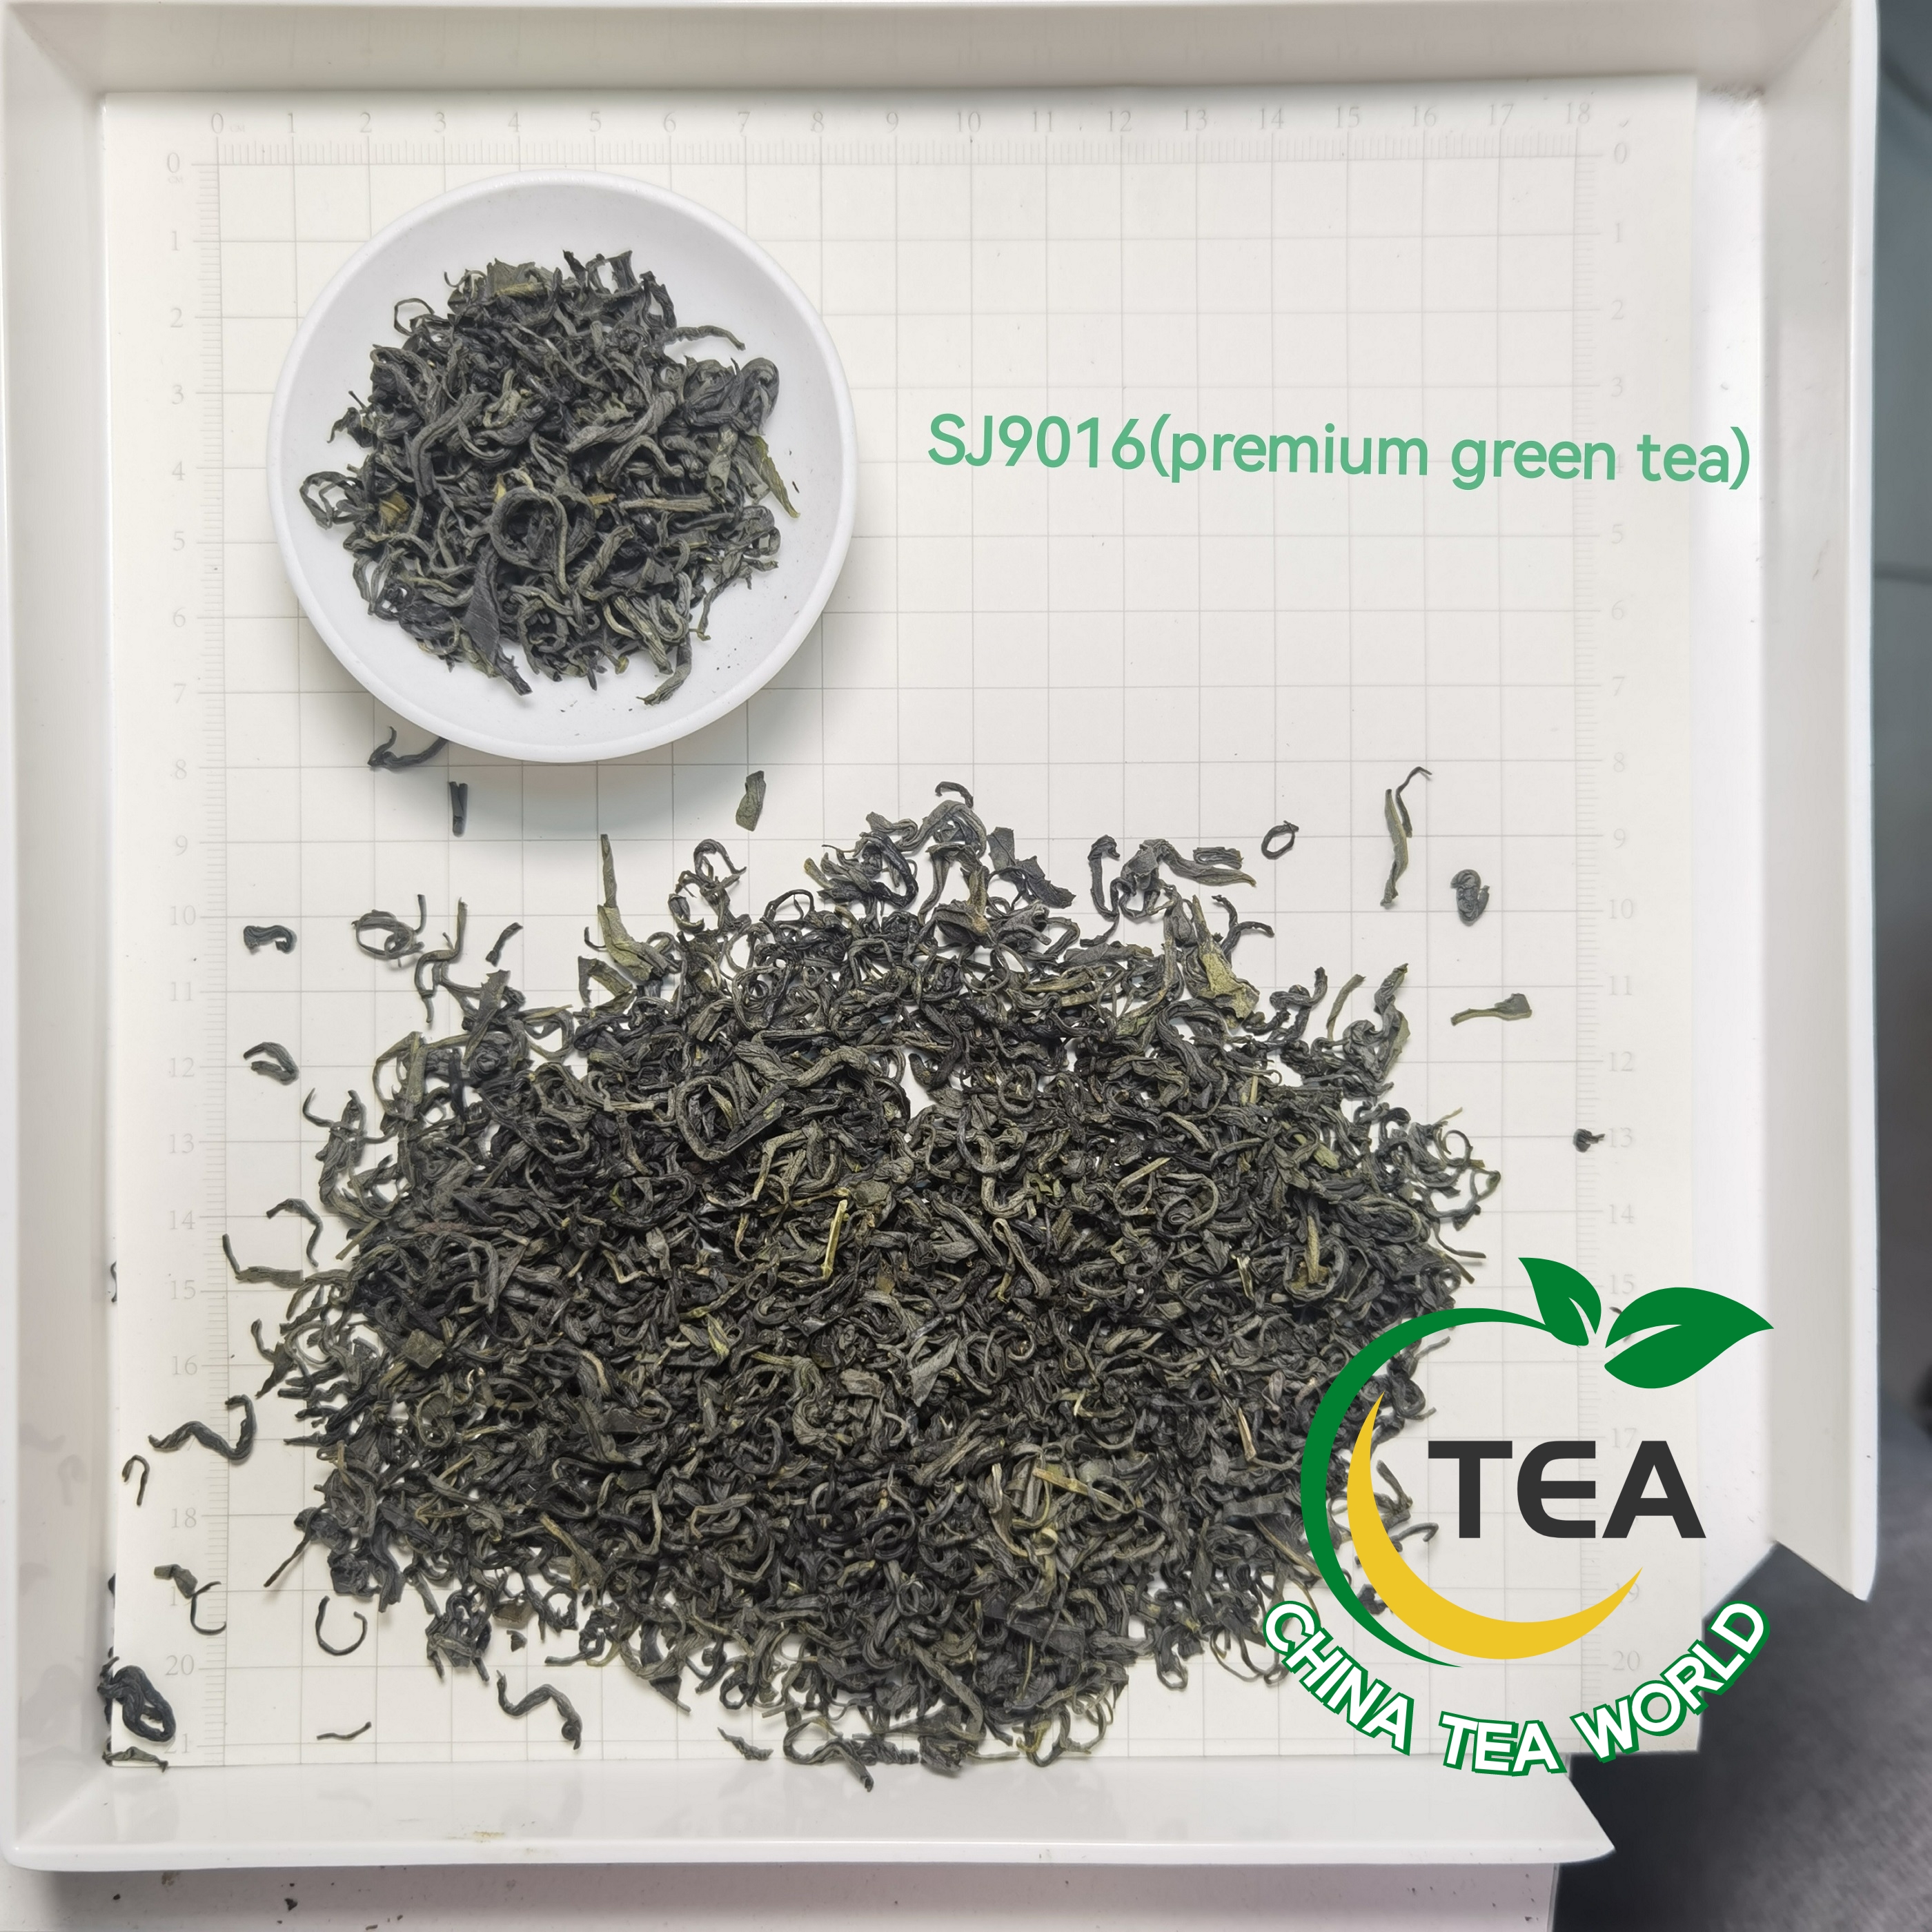 Premium green tea